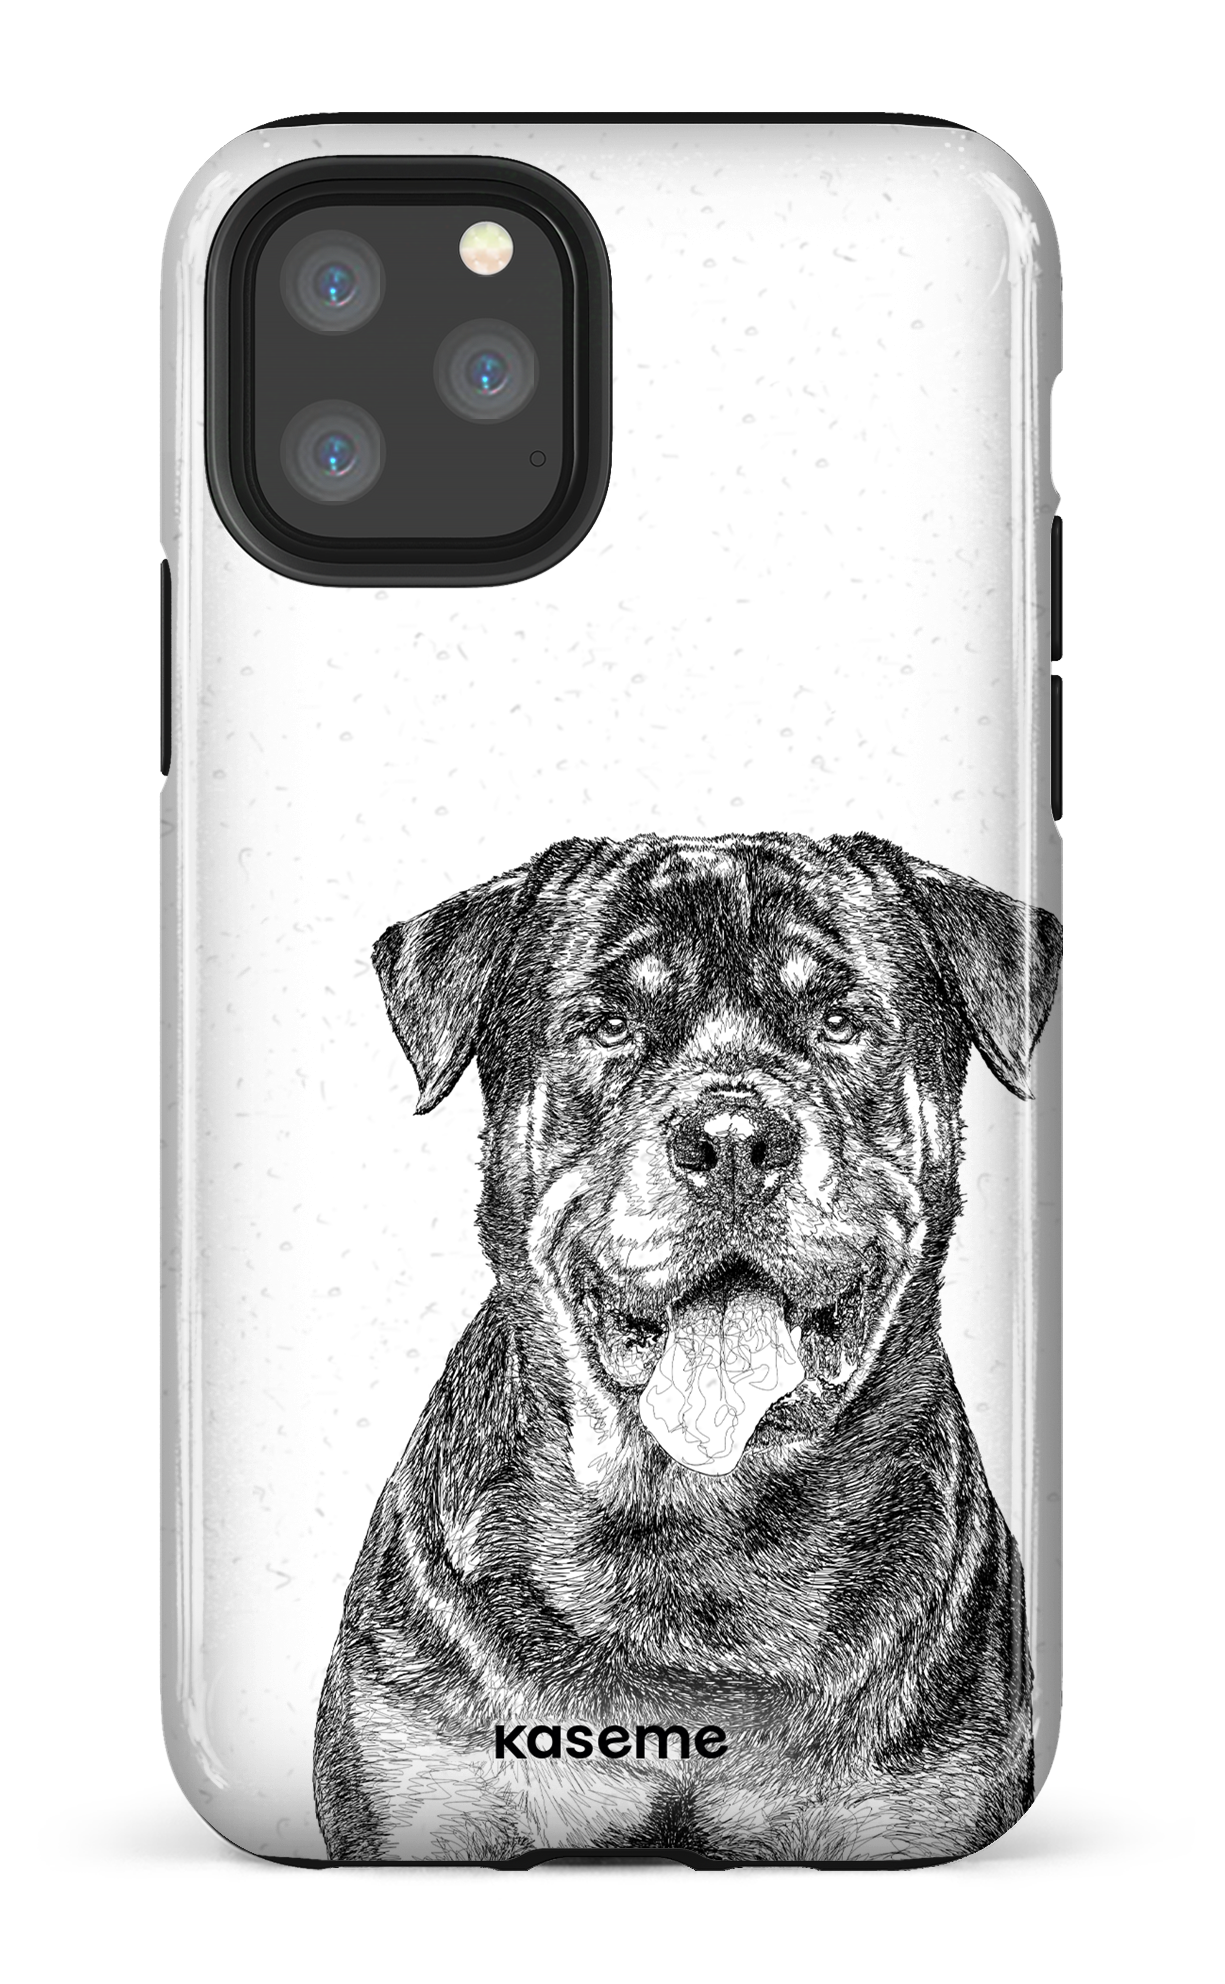 Rottweiler - iPhone 11 Pro